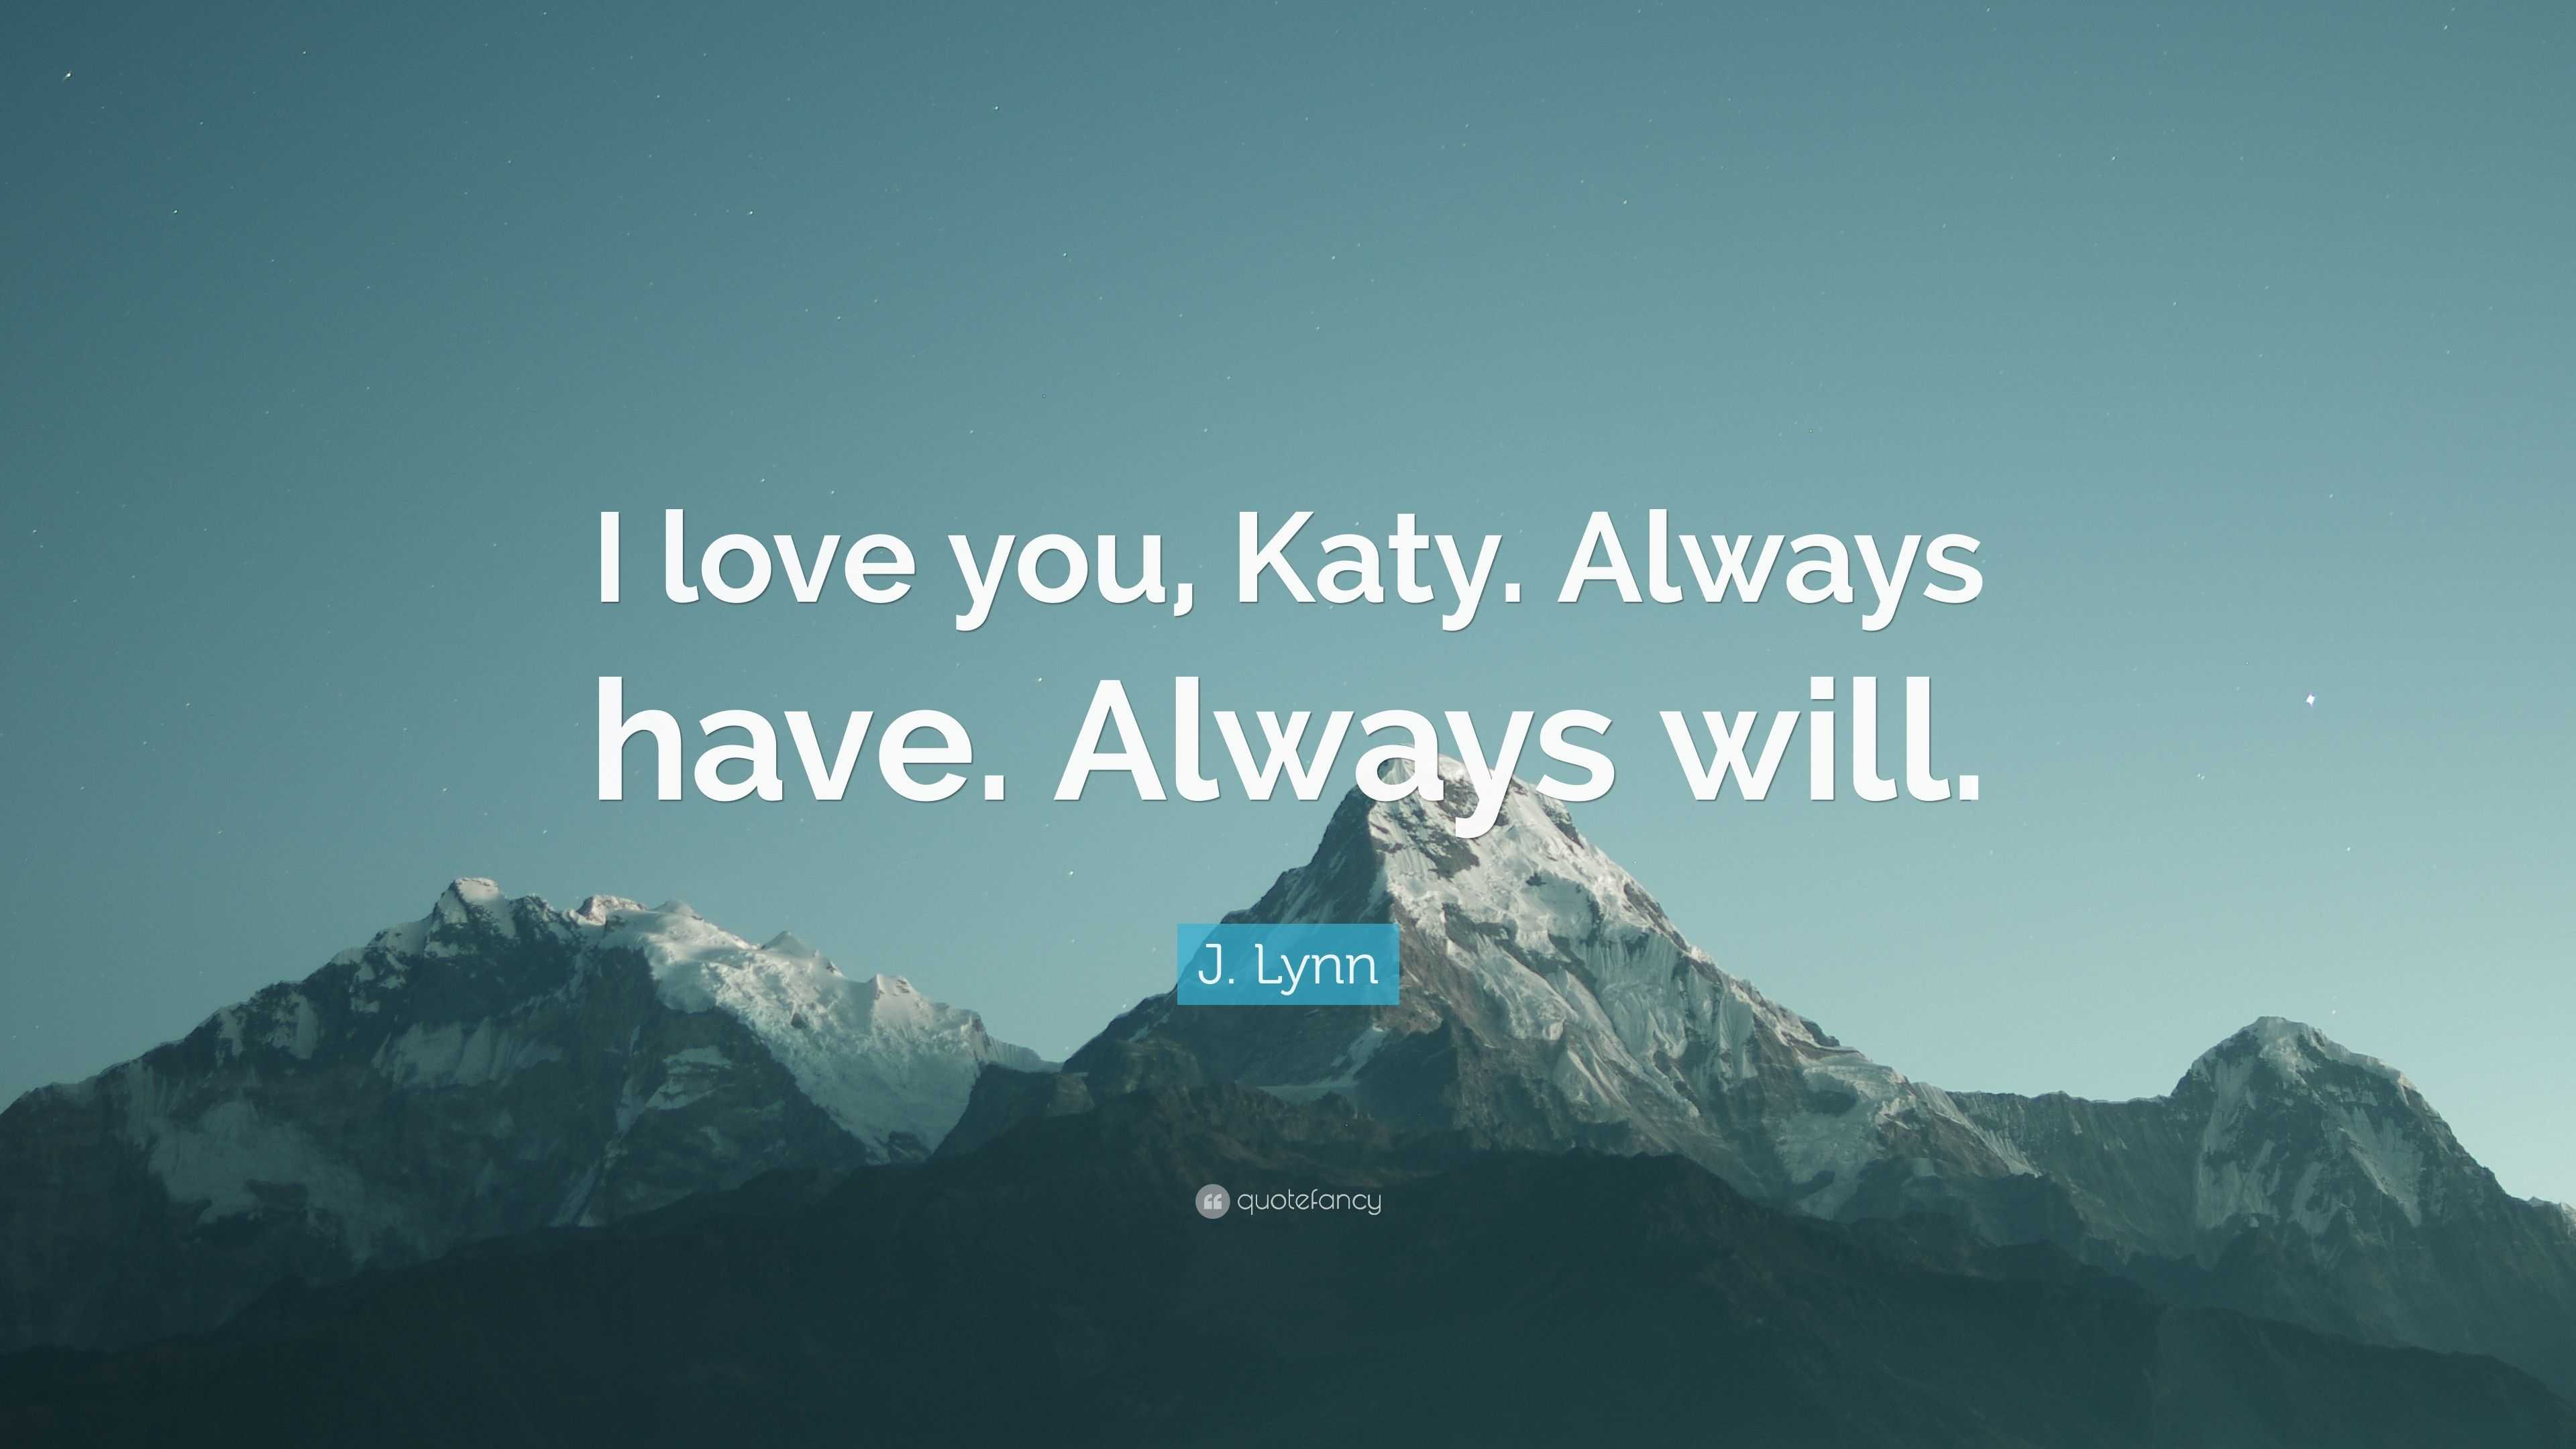 J Lynn Quote “I love you Katy Always have Always